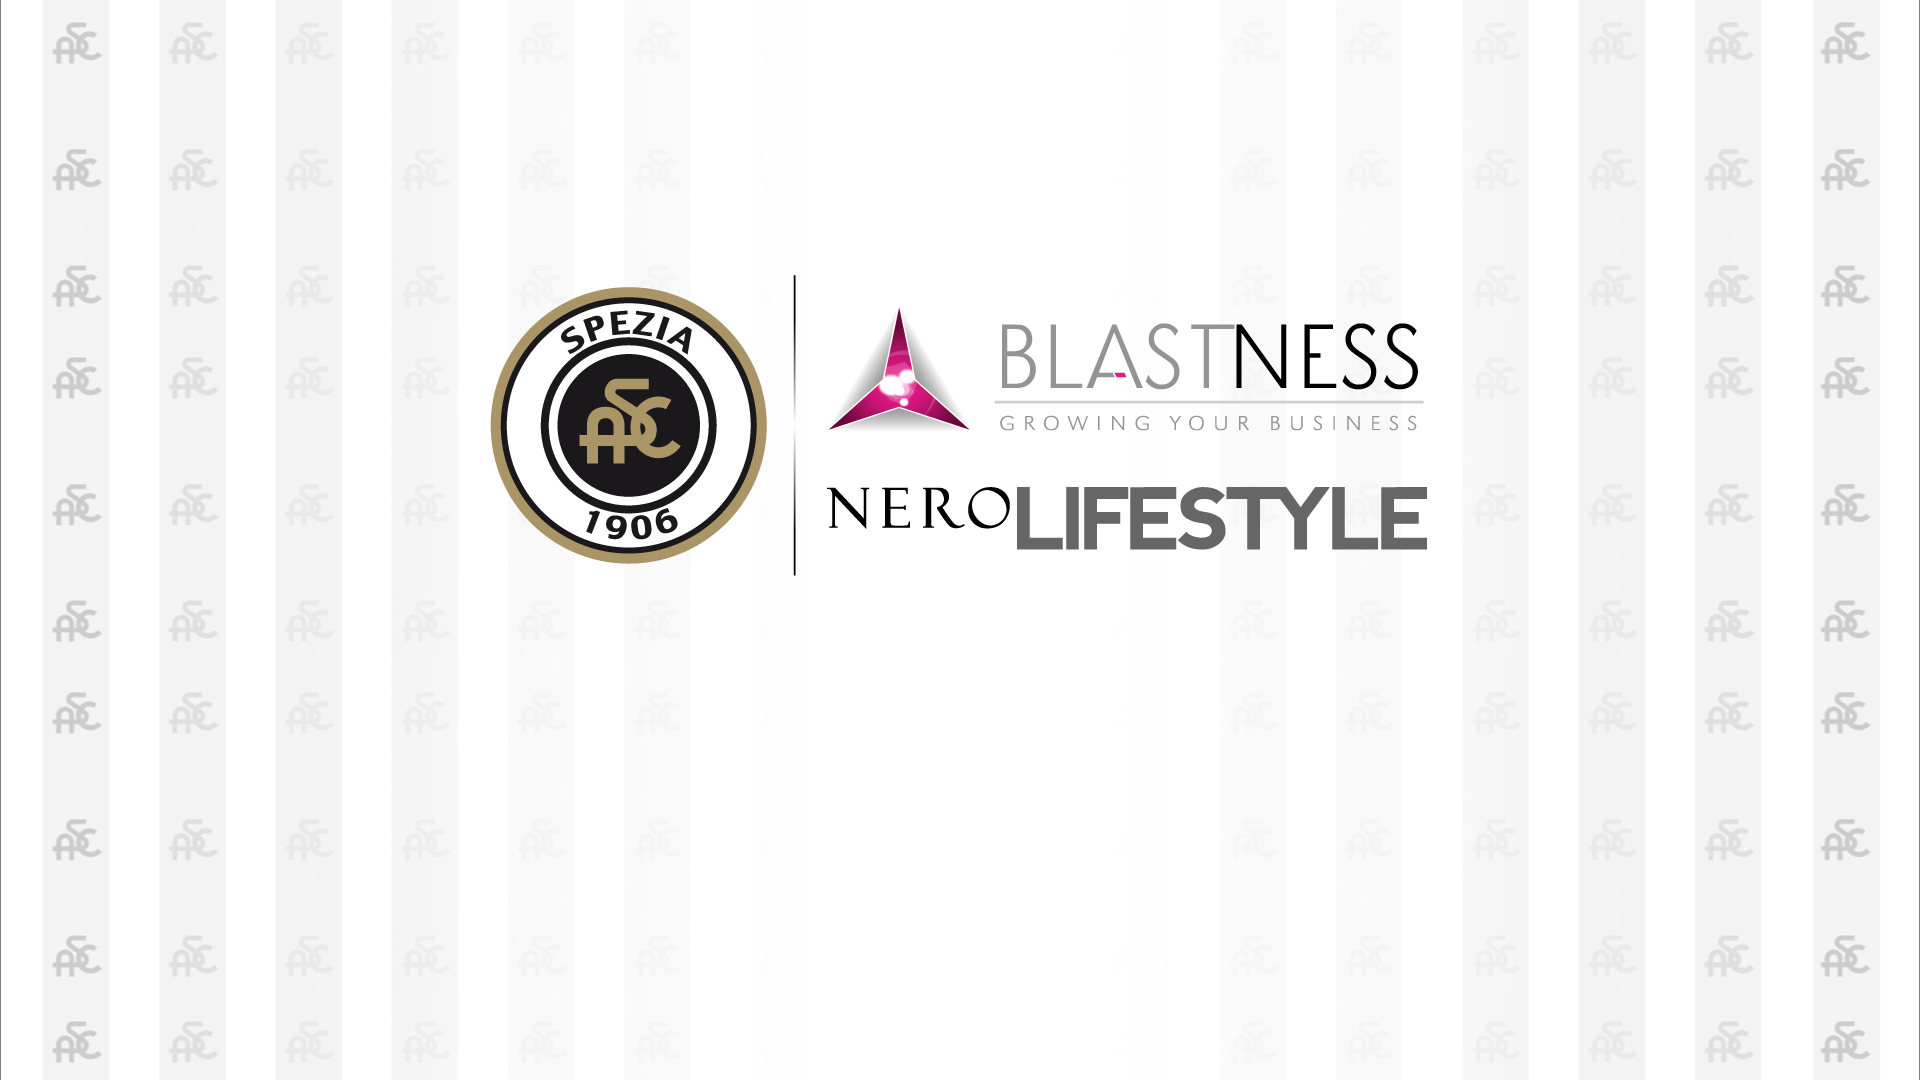 Blastness and NERO Lifestyle join the Spezia Calcio family becoming Top Sponsors